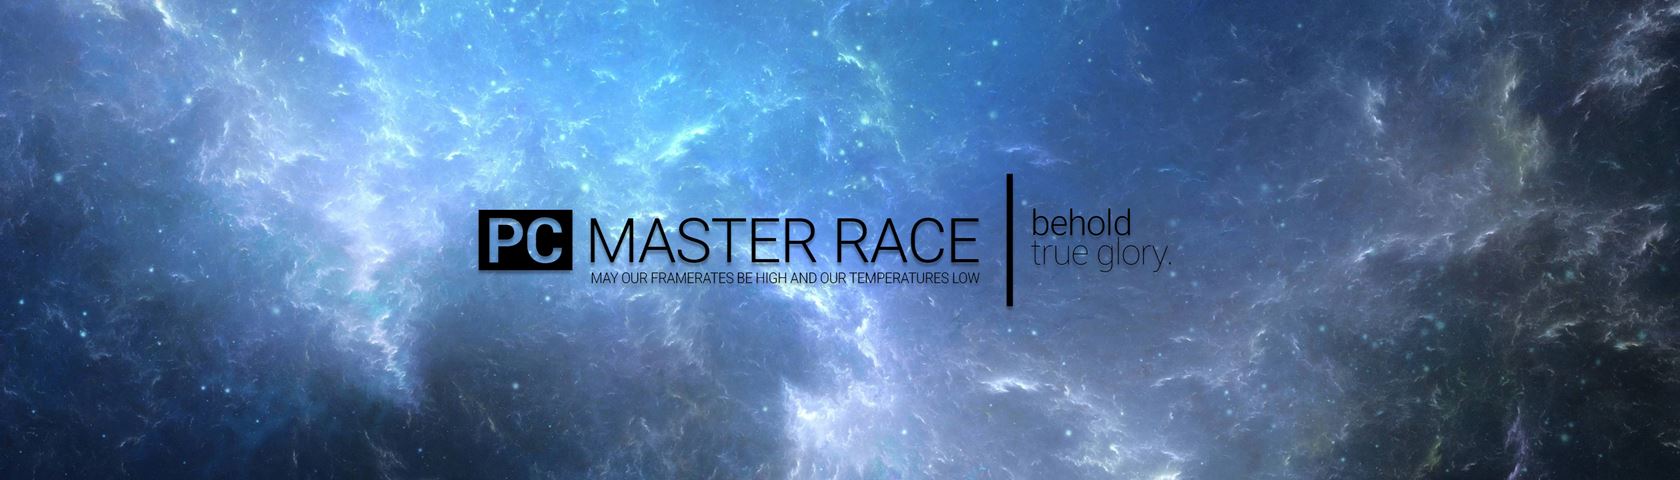 Pc Master Race Image Wallpaperfusion Binary